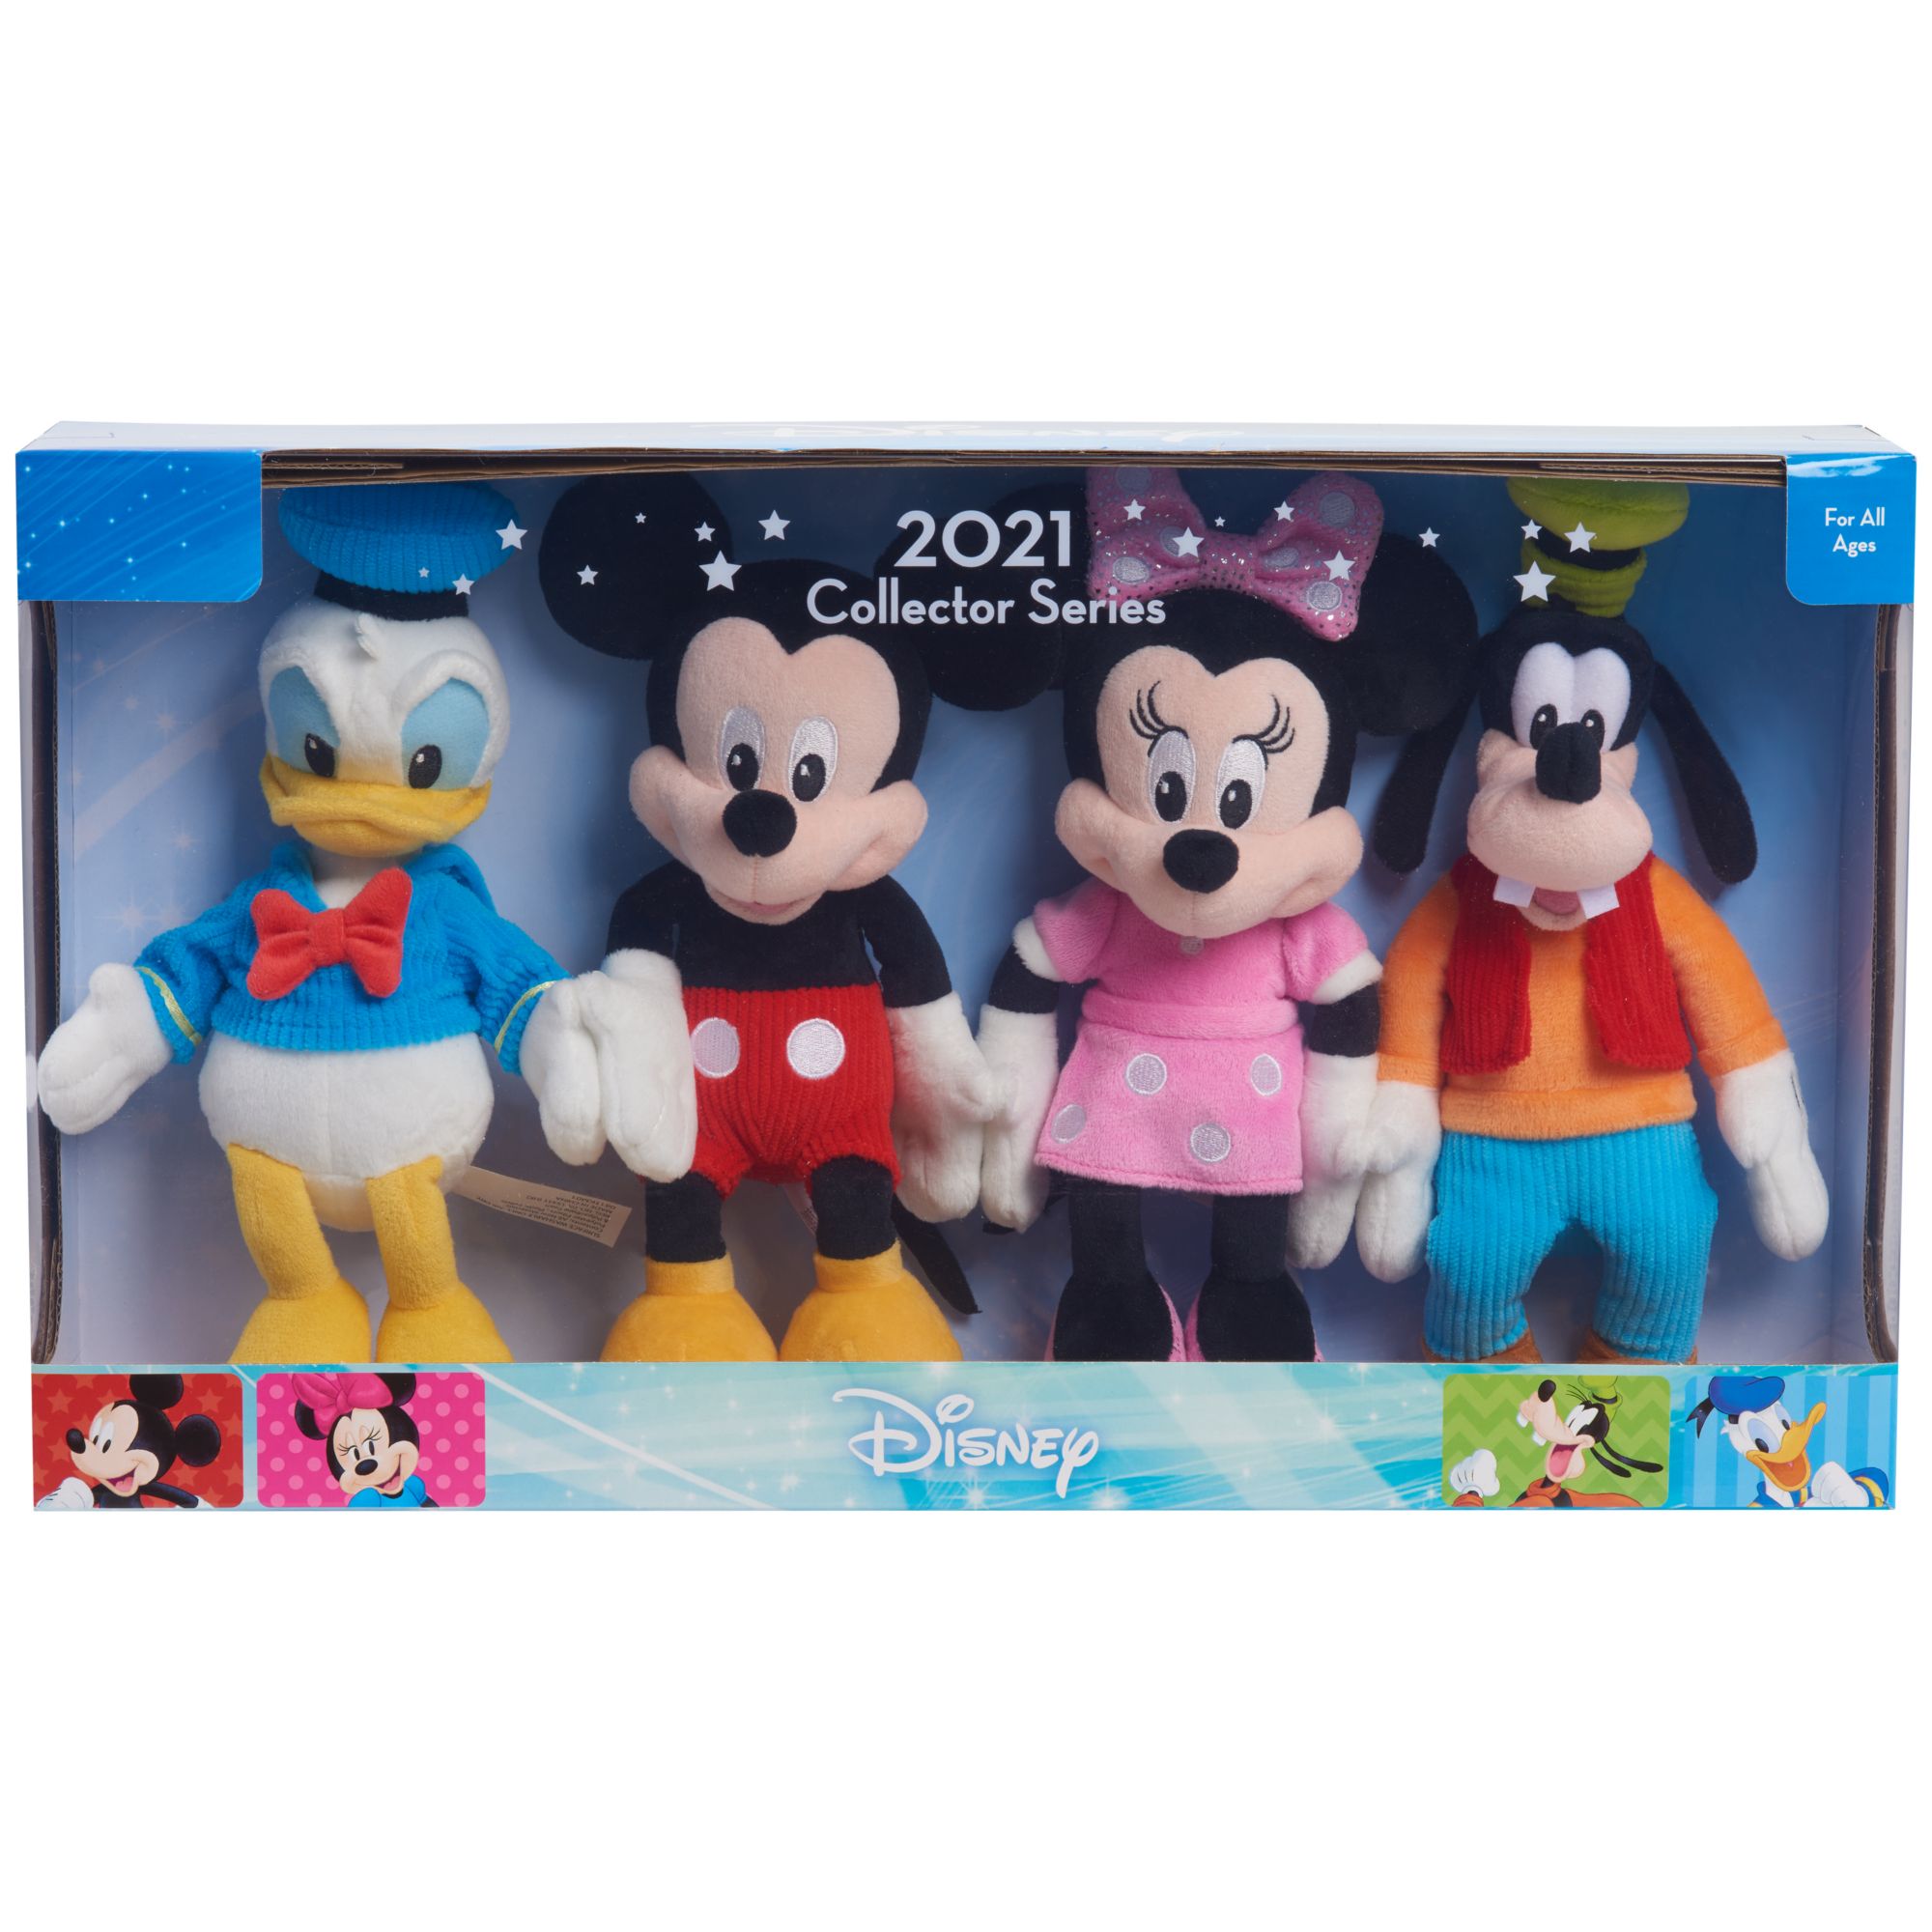 Buy Disney Doorables Stitch Collector Set, 8 Piece